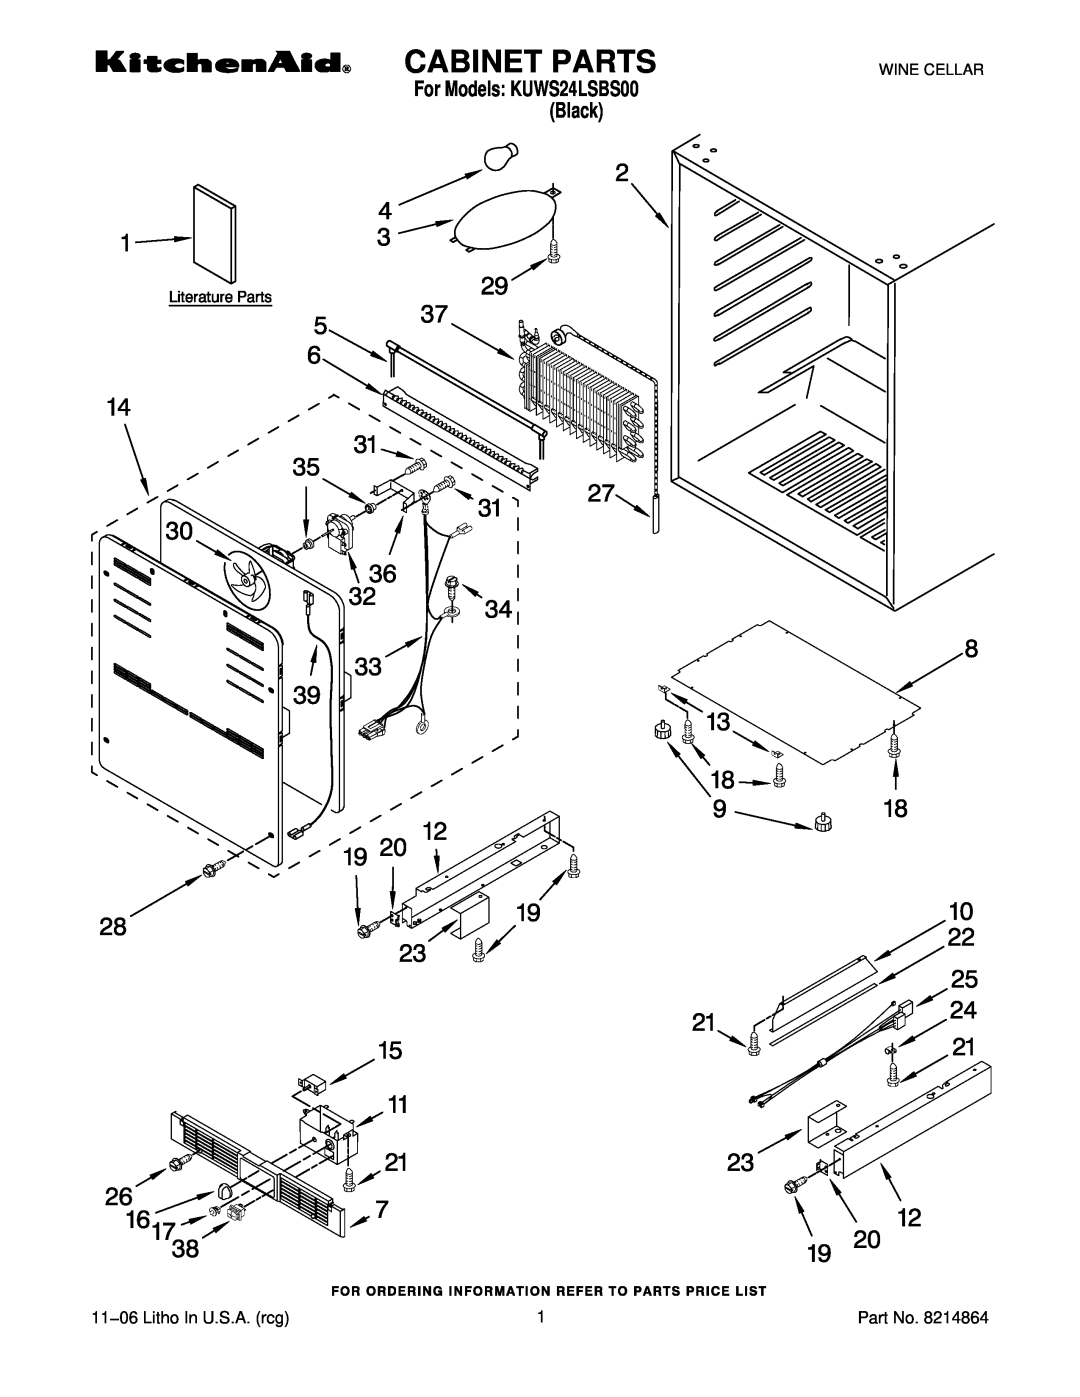 KitchenAid manual Cabinet Parts, 11−06 Litho In U.S.A. rcg, For Models KUWS24LSBS00 Black, Wine Cellar 